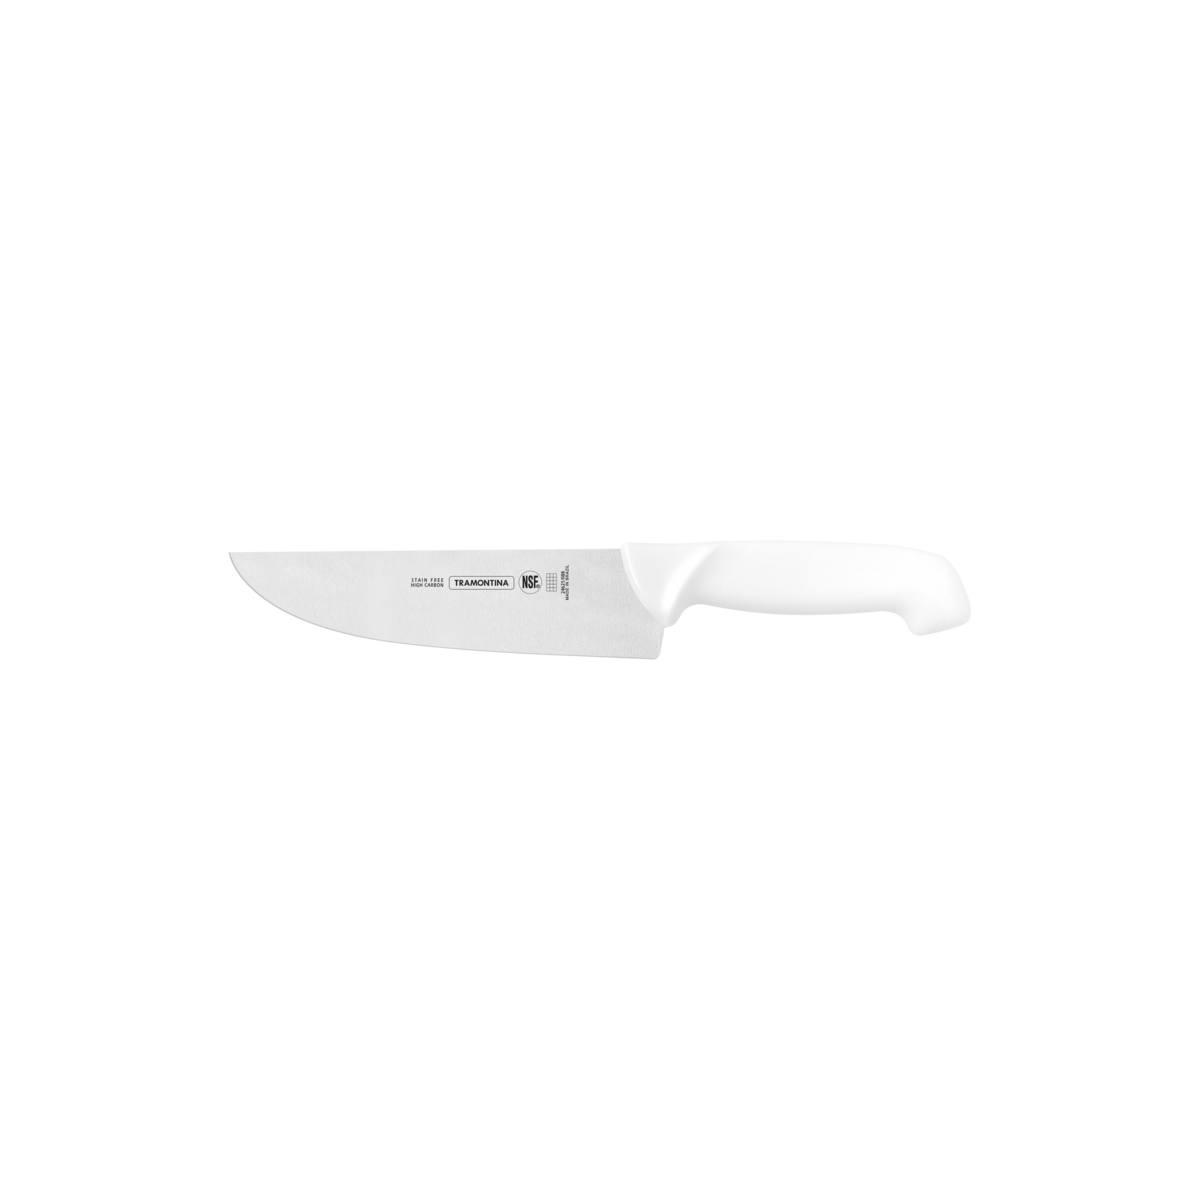 Cuchillo de carnicero, cuchillo profesional de 8 pulgadas, cuchillo de  chef, herramienta de acero inoxidable, mango de madera, cortador de huesos